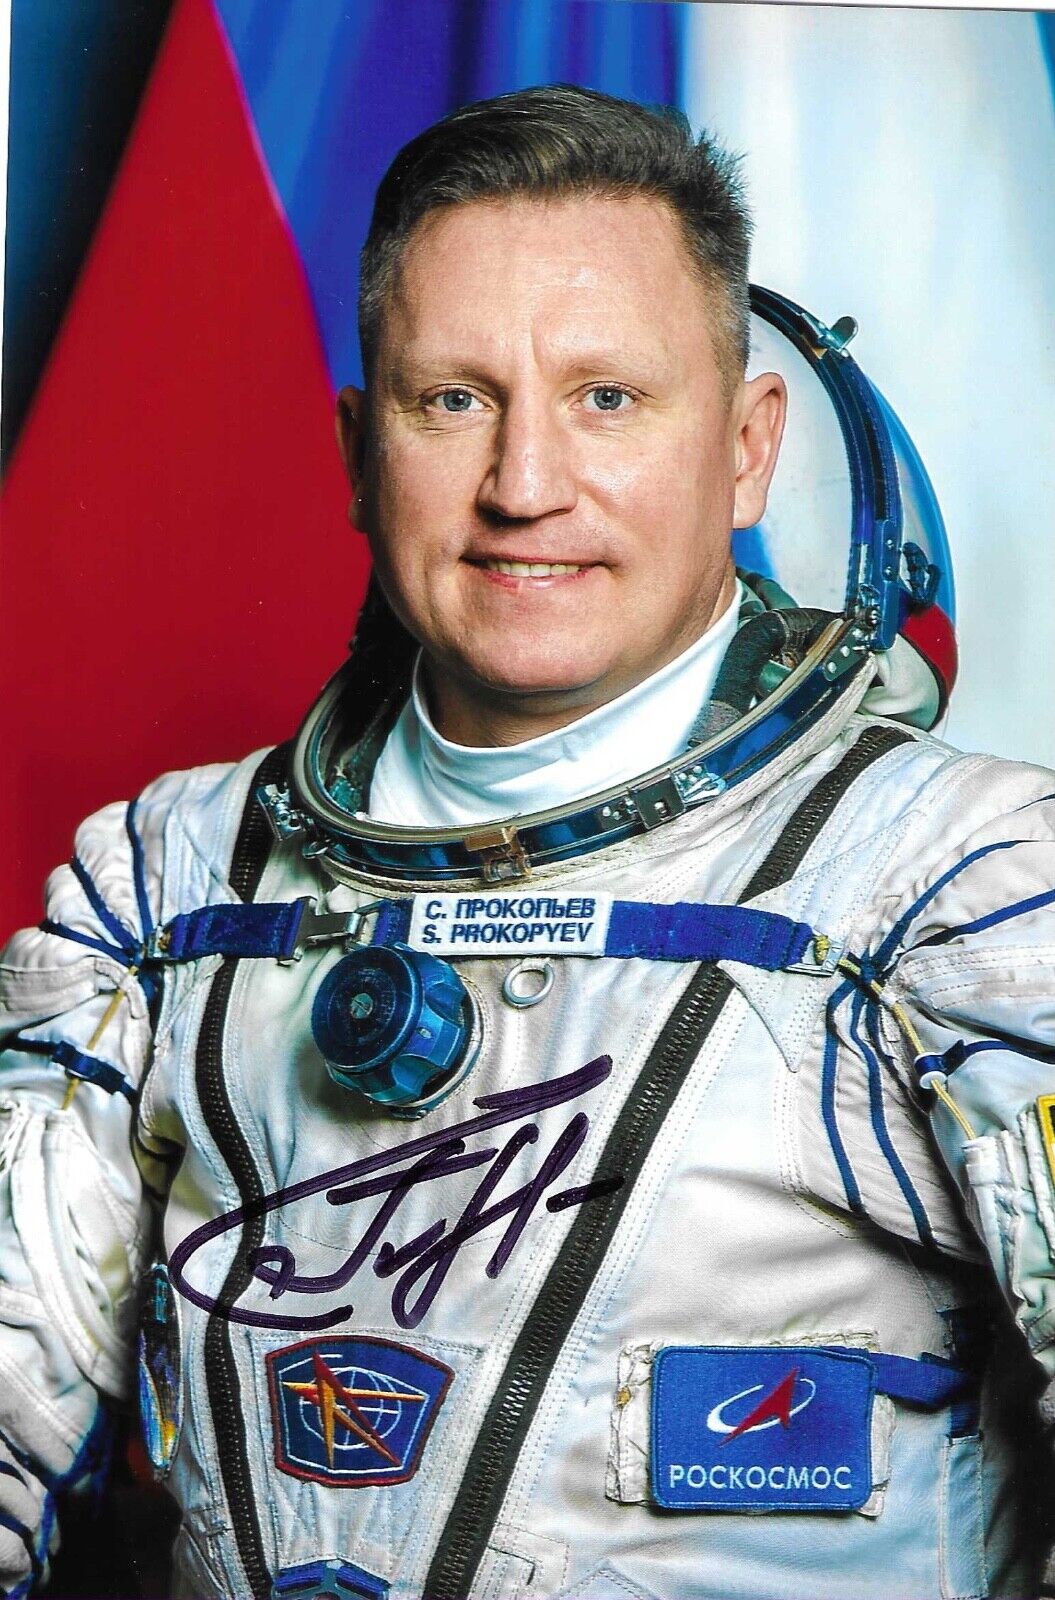 Cosmonaut Prokopyev Portrait Official Signed Photo Soyuz MS-09 ISS Exp. 56 57